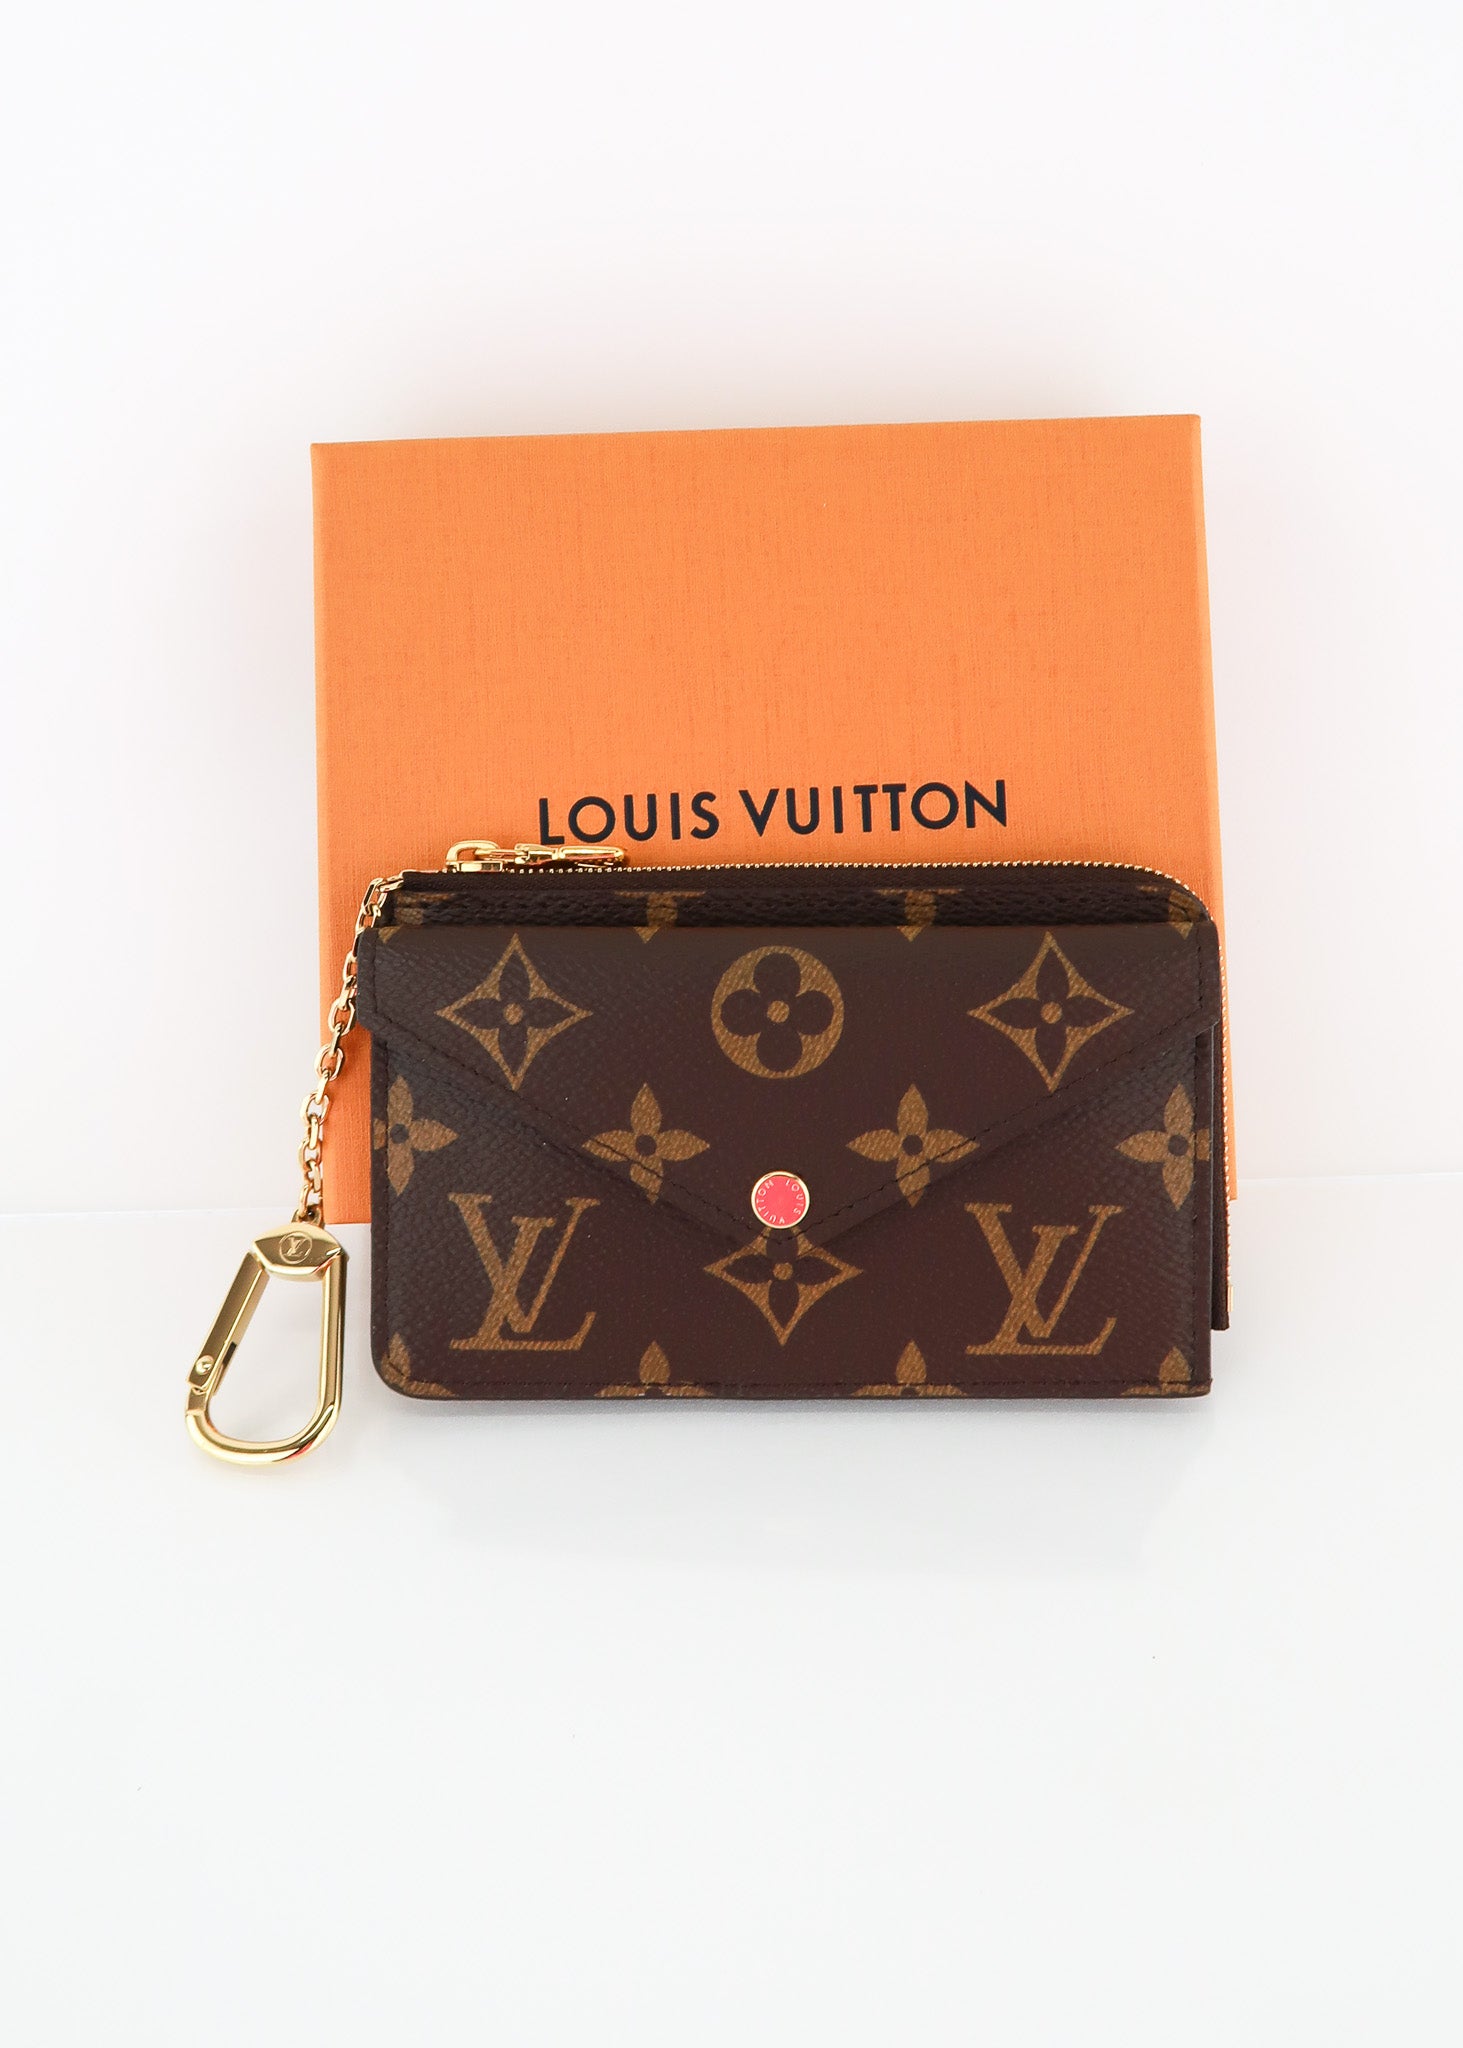 REVIEW] Louis Vuitton Recto Verso Wallet in Monogram Empreinte Leather from  Birdcage / Seller Kelvin : r/WagoonLadies